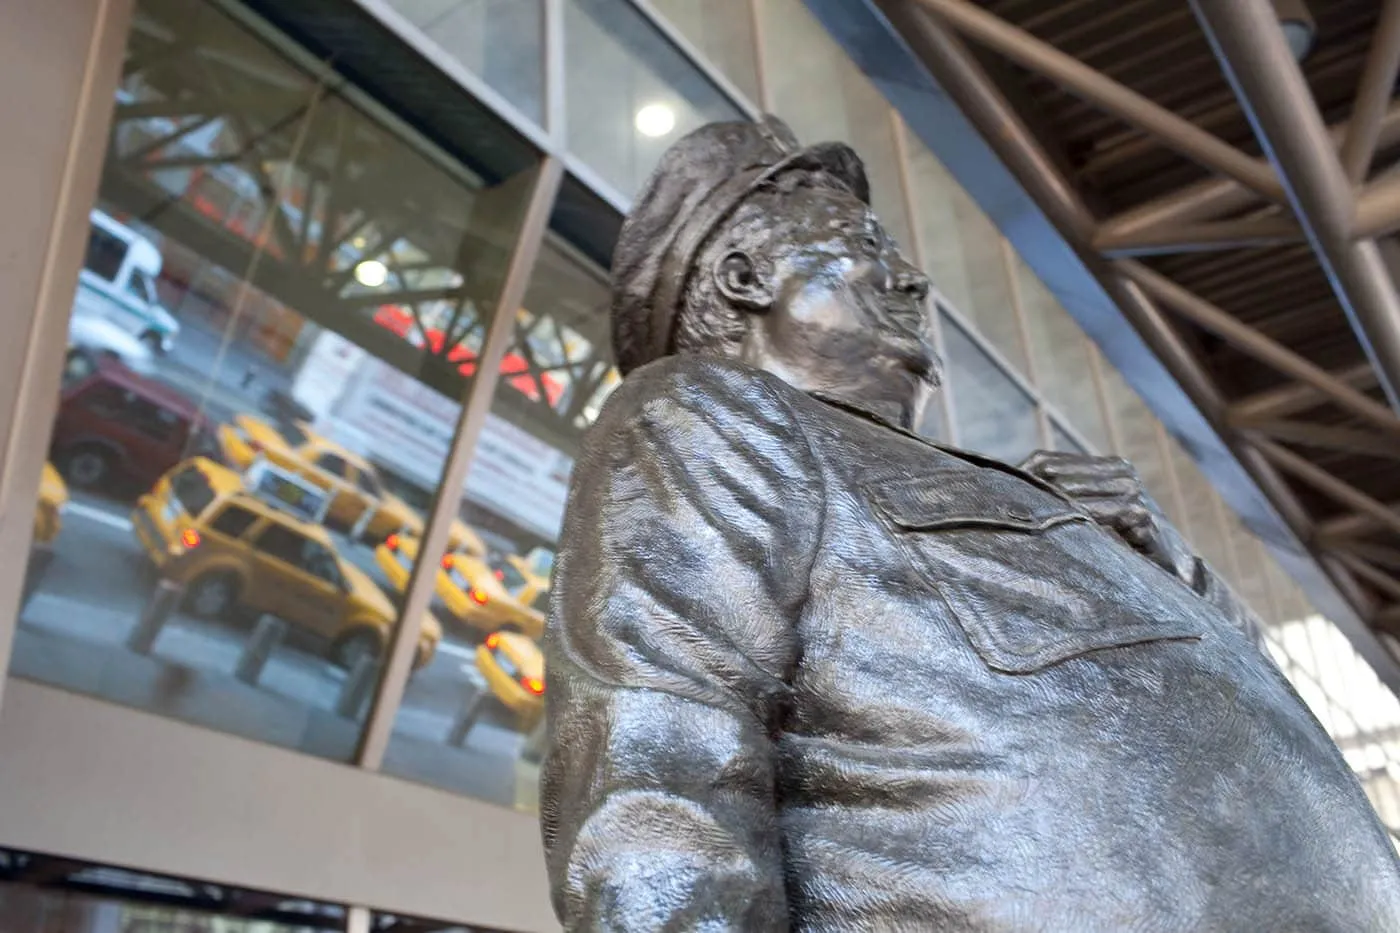 Ralph Kramden Statue of Jackie Gleason from the Honeymooners at the New York City Port Authority Bus Terminal